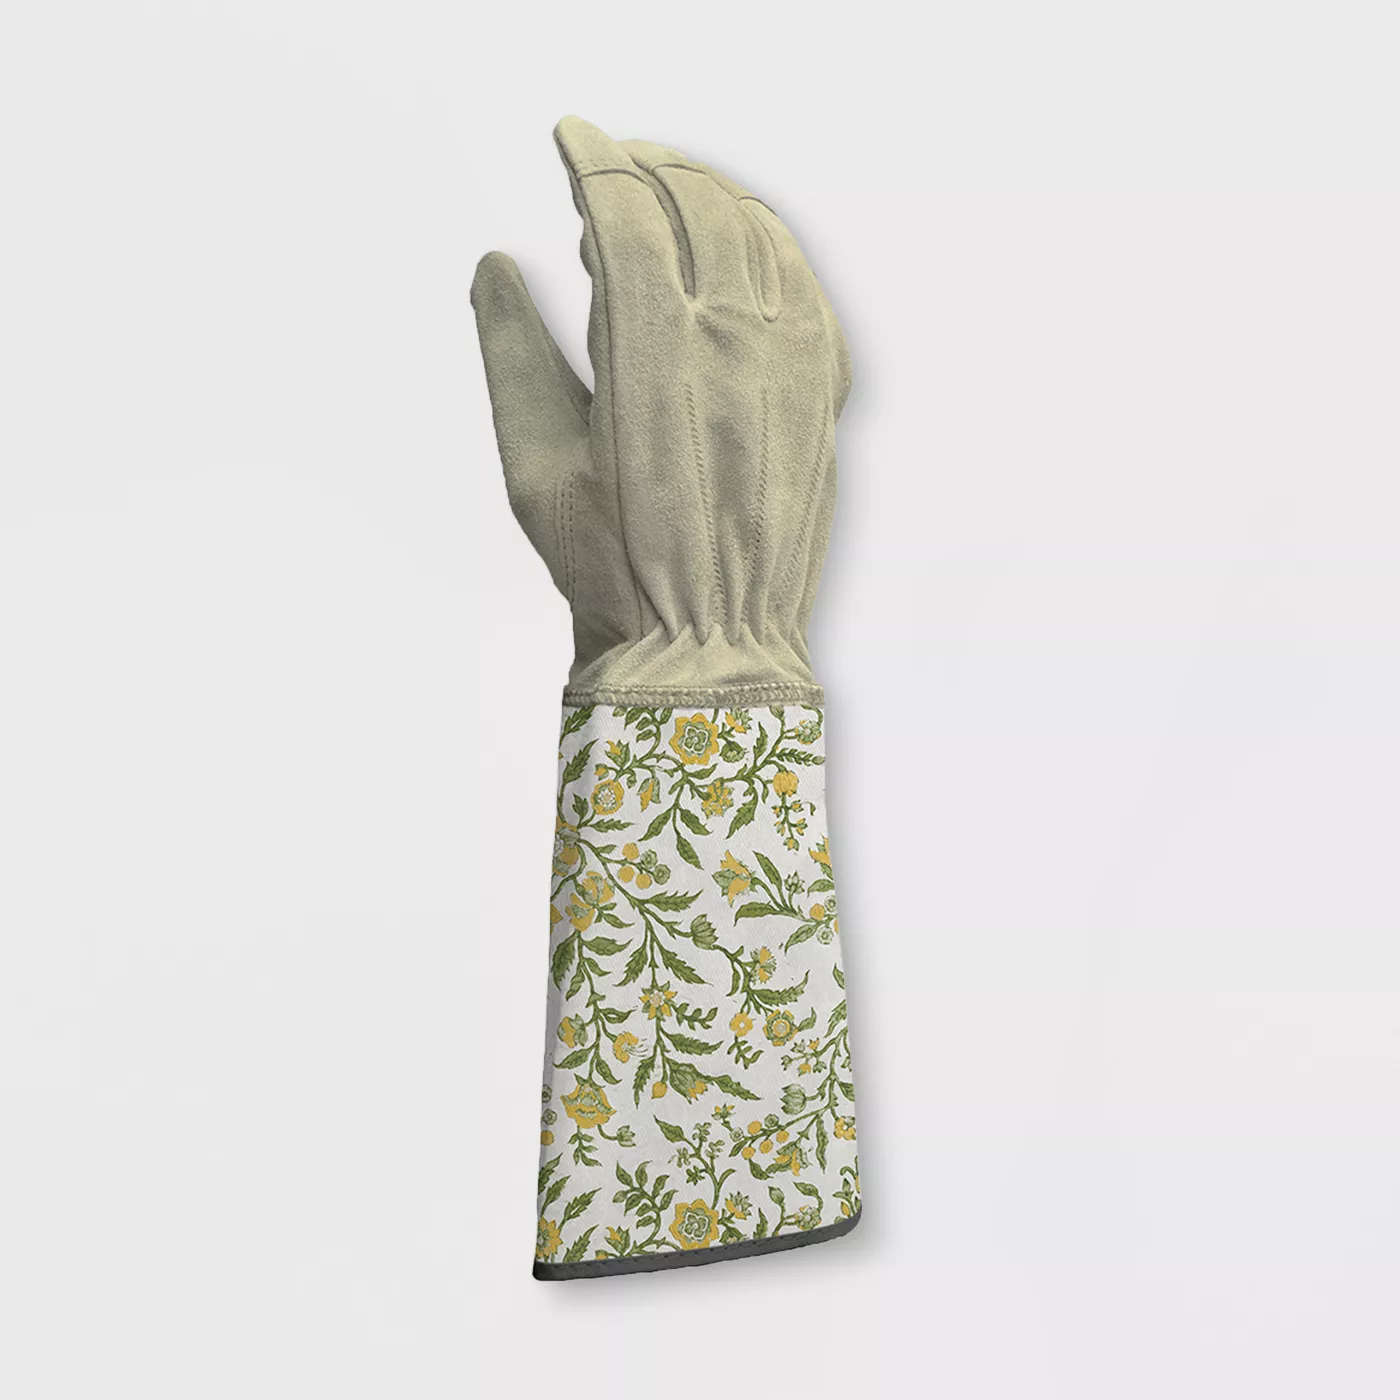 Floral Cotton Gardening Gloves Green - Smith & Hawken™ - image 1 of 1